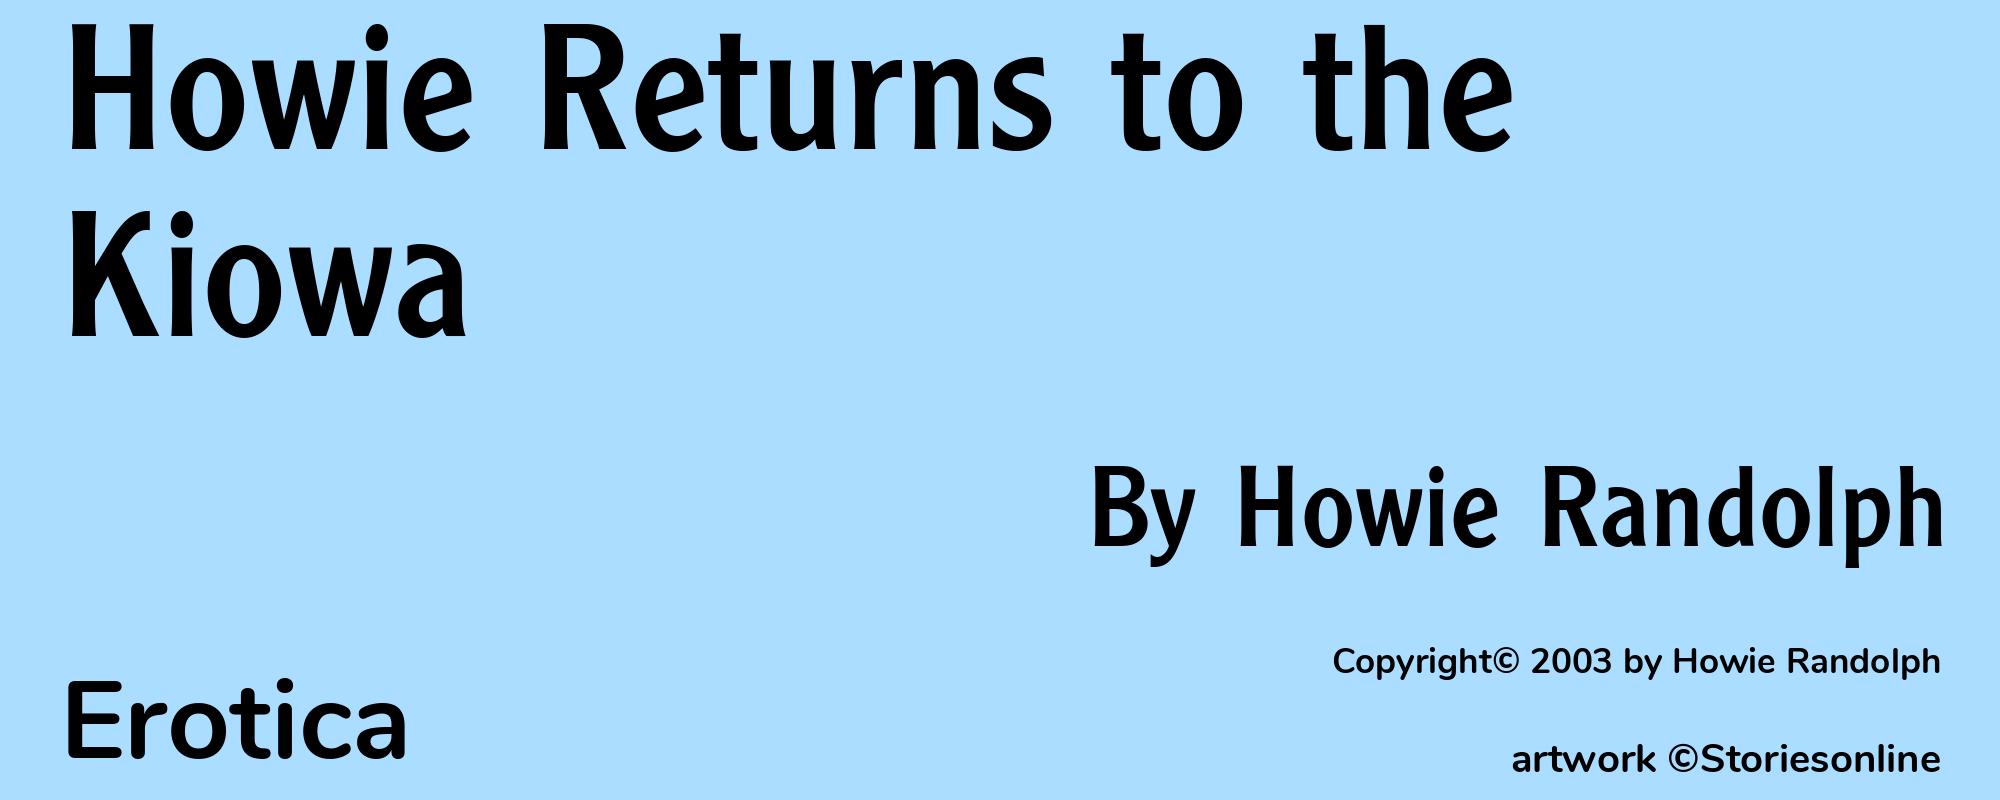 Howie Returns to the Kiowa - Cover